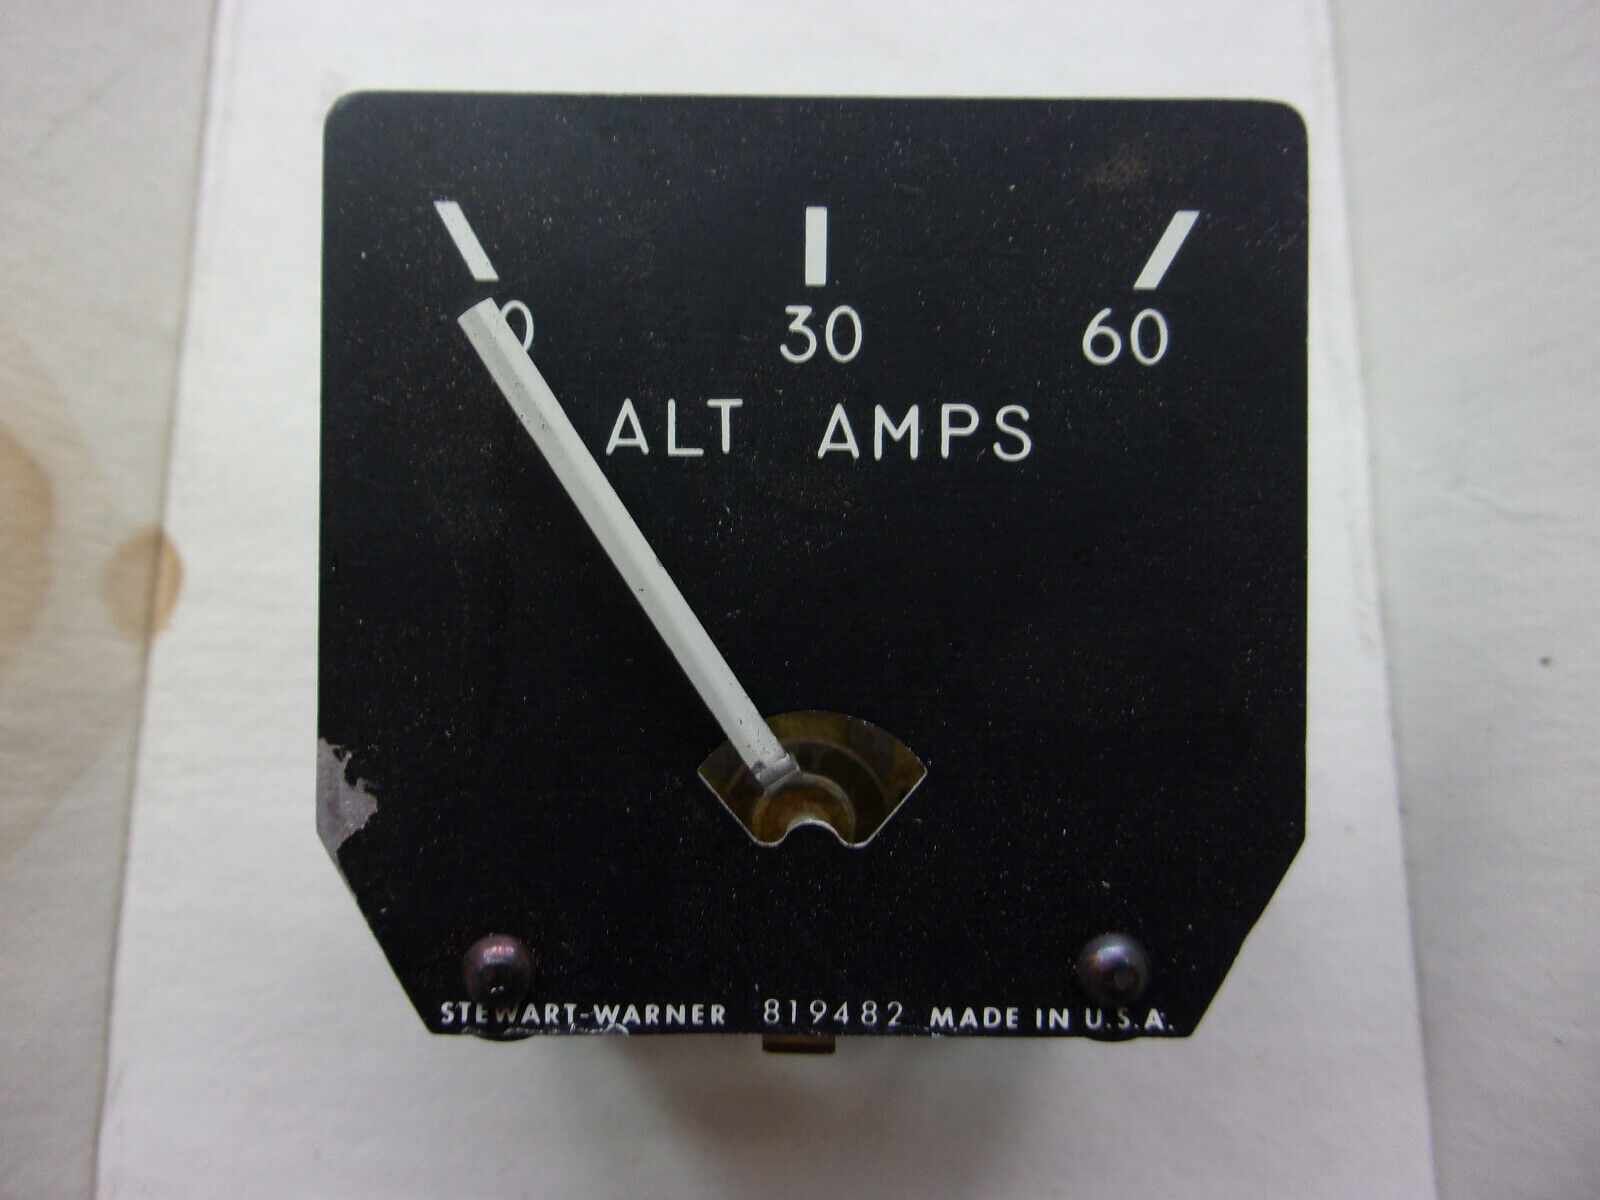 Piper 440-441 Stewart-Warner 819482 Alternator Amps Ammeter Indicator Gauge